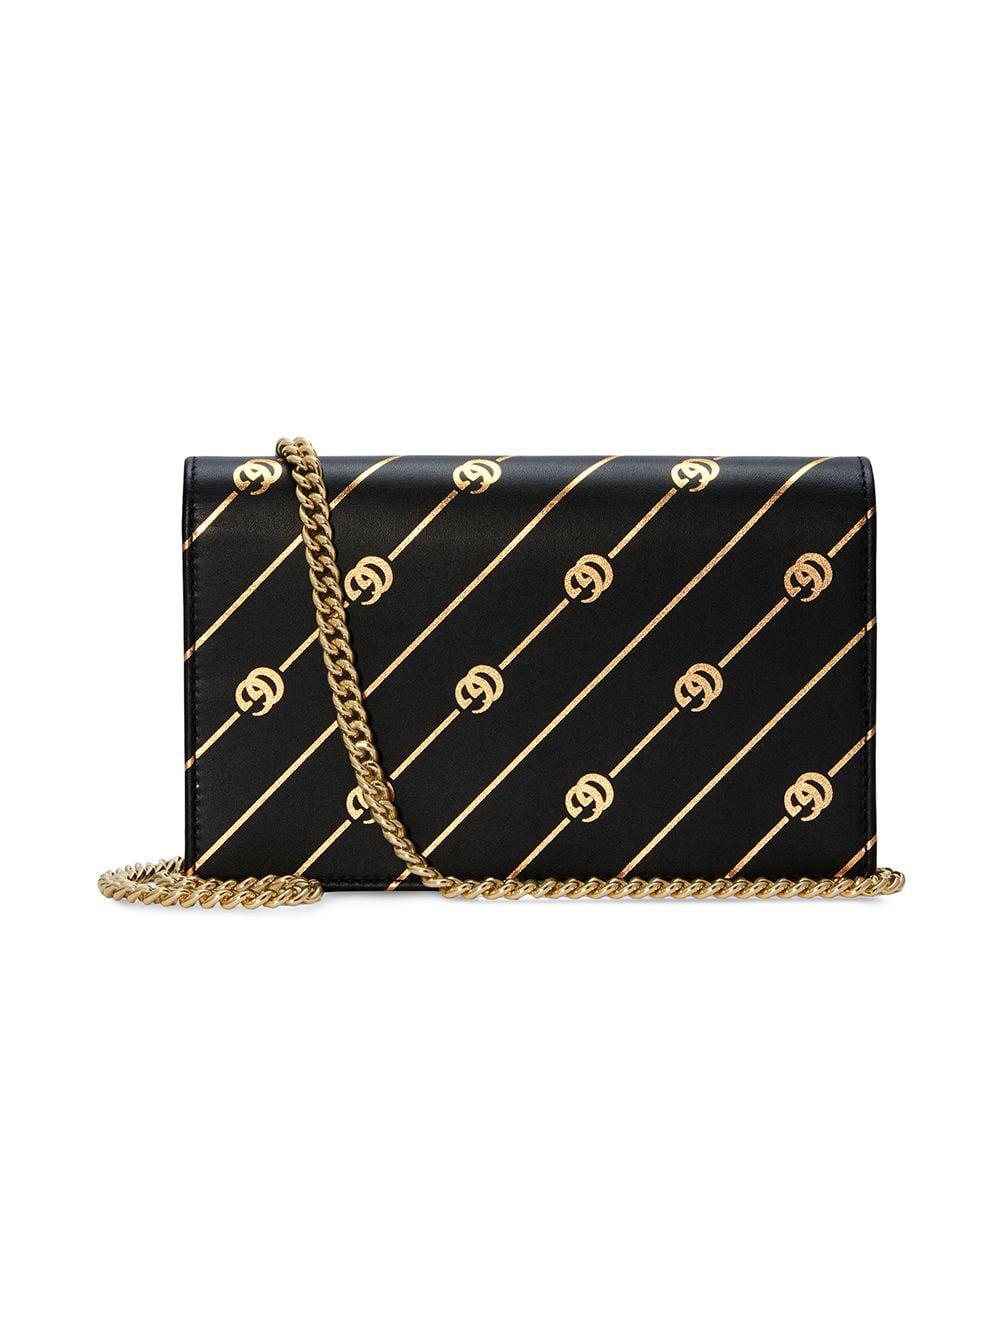 gucci black purse with gold chain